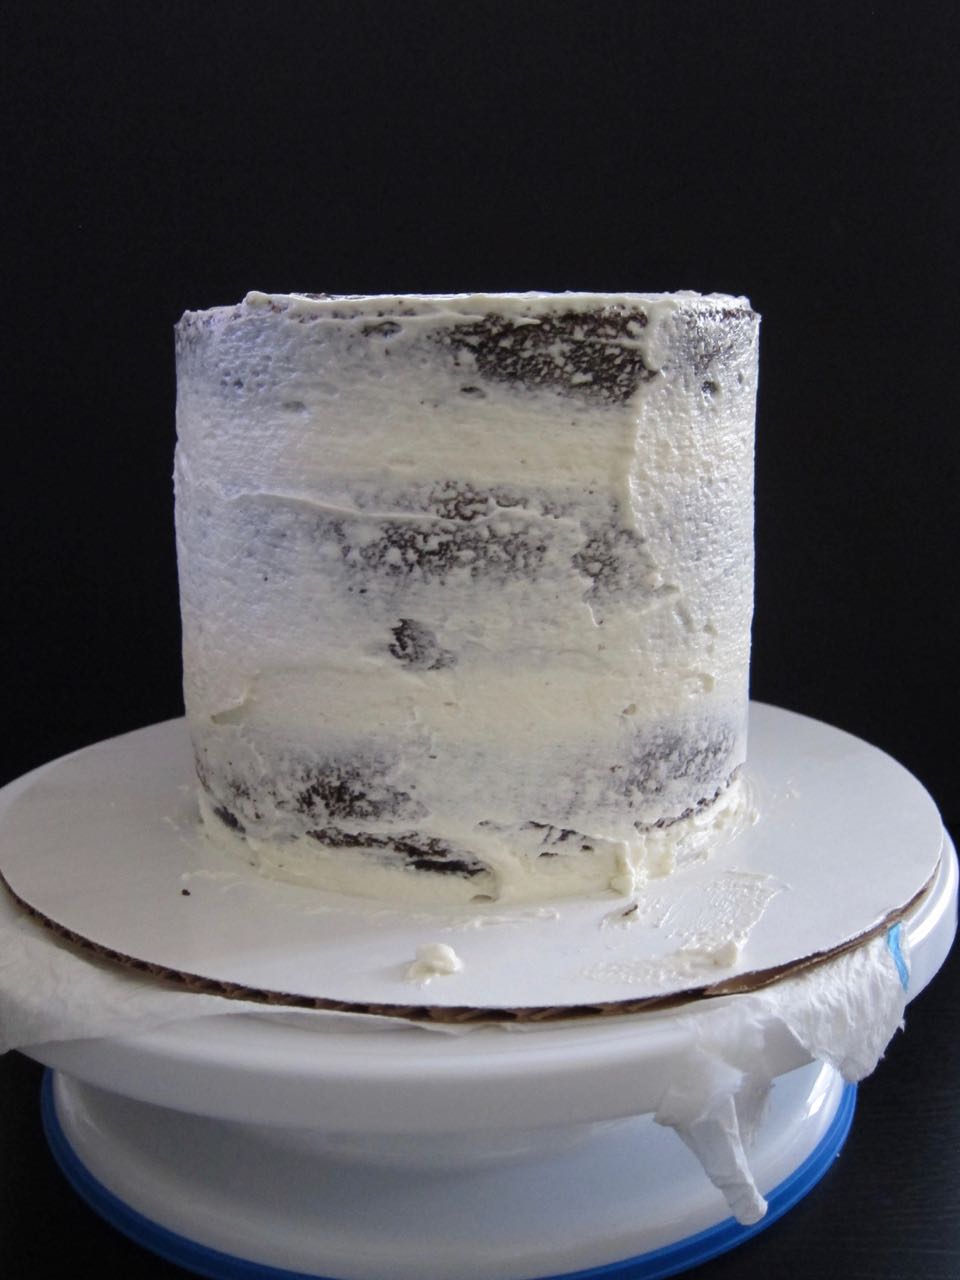 crumb coat cake layers.jpg